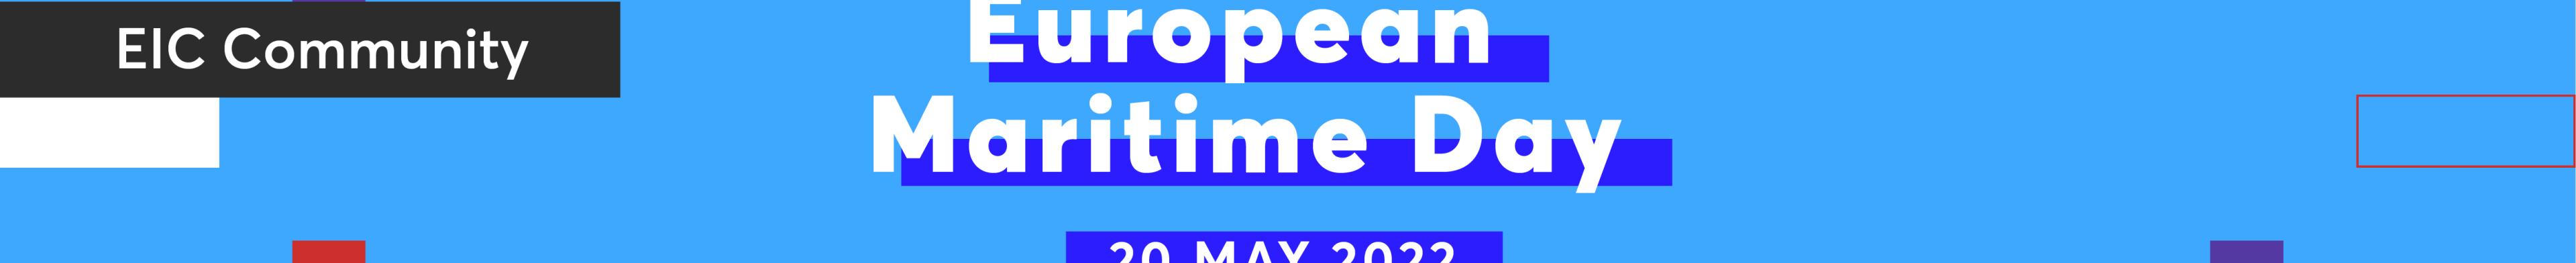 eic_world_days_european_maritime_day_community_banner.jpg